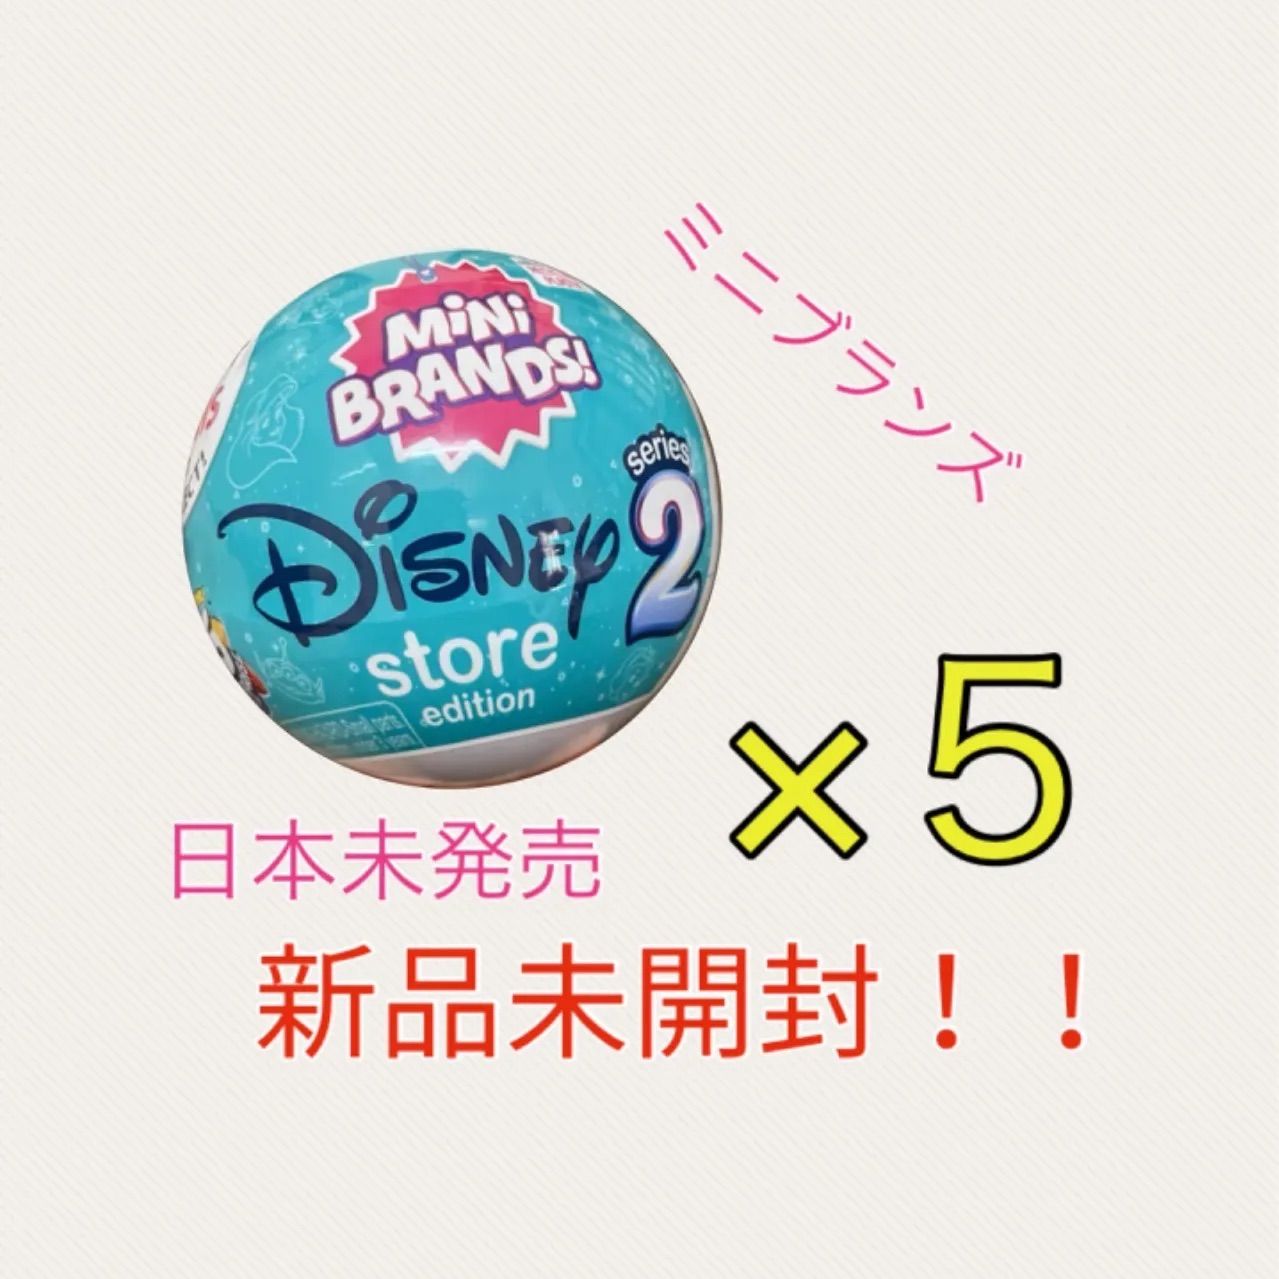 ZURU 5 SURPRISE ディズニー ミニブランズ MiNi BRANDS Disney store5点-